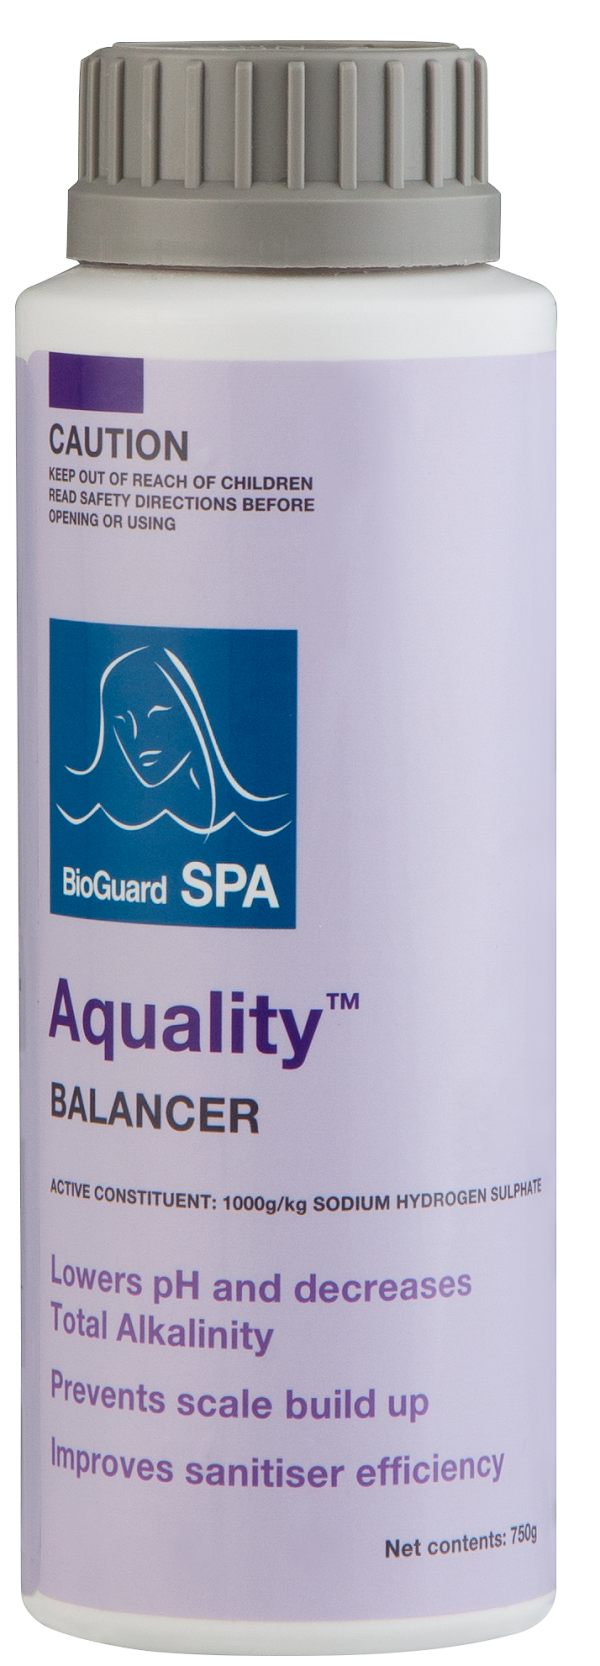 Aquality_Balancer_750g